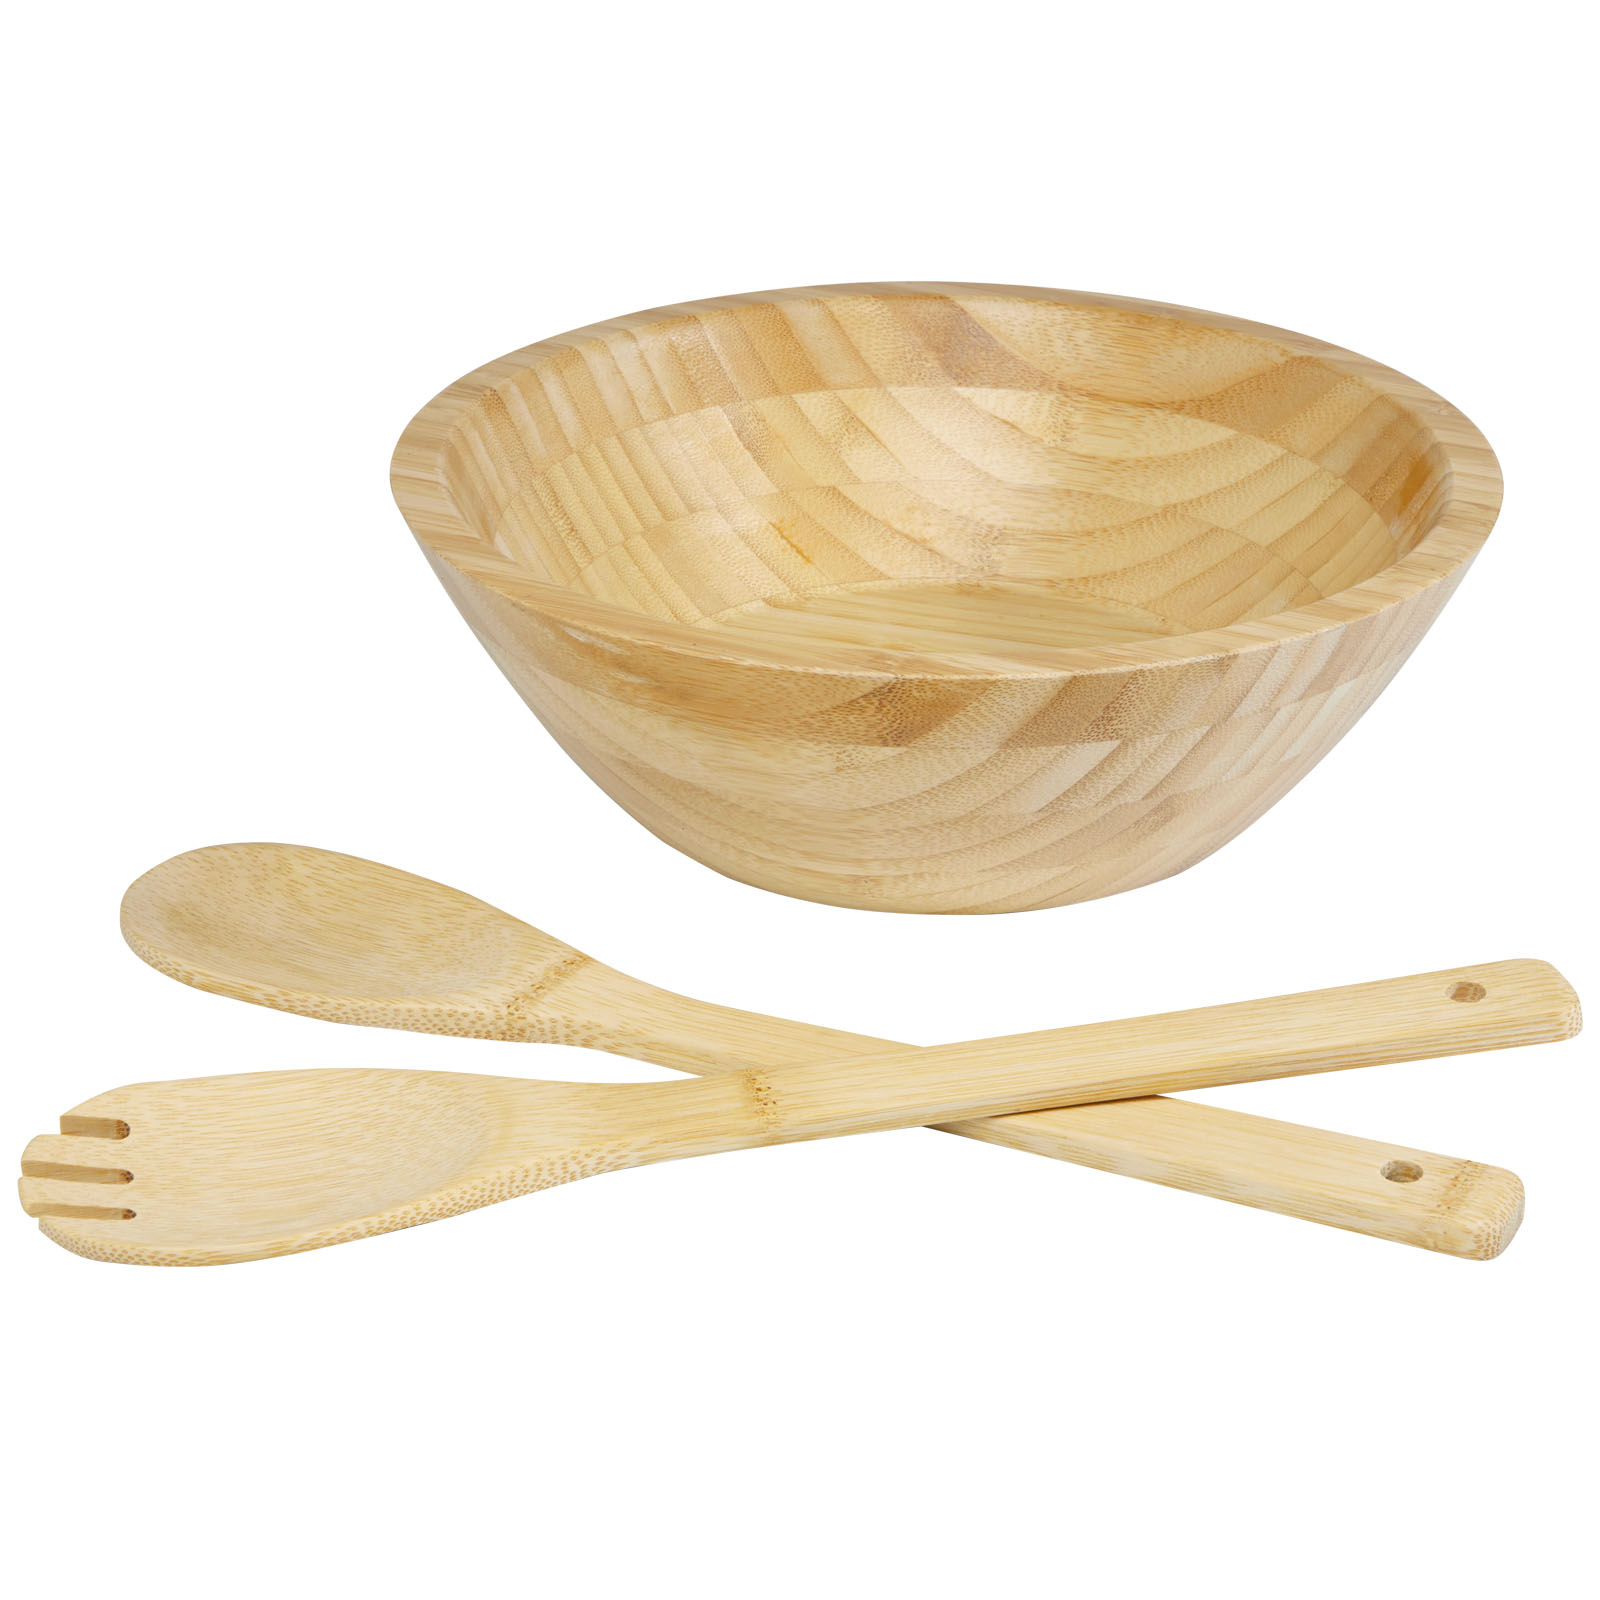 Bamboo salad bowl and utensils JOULE - natural